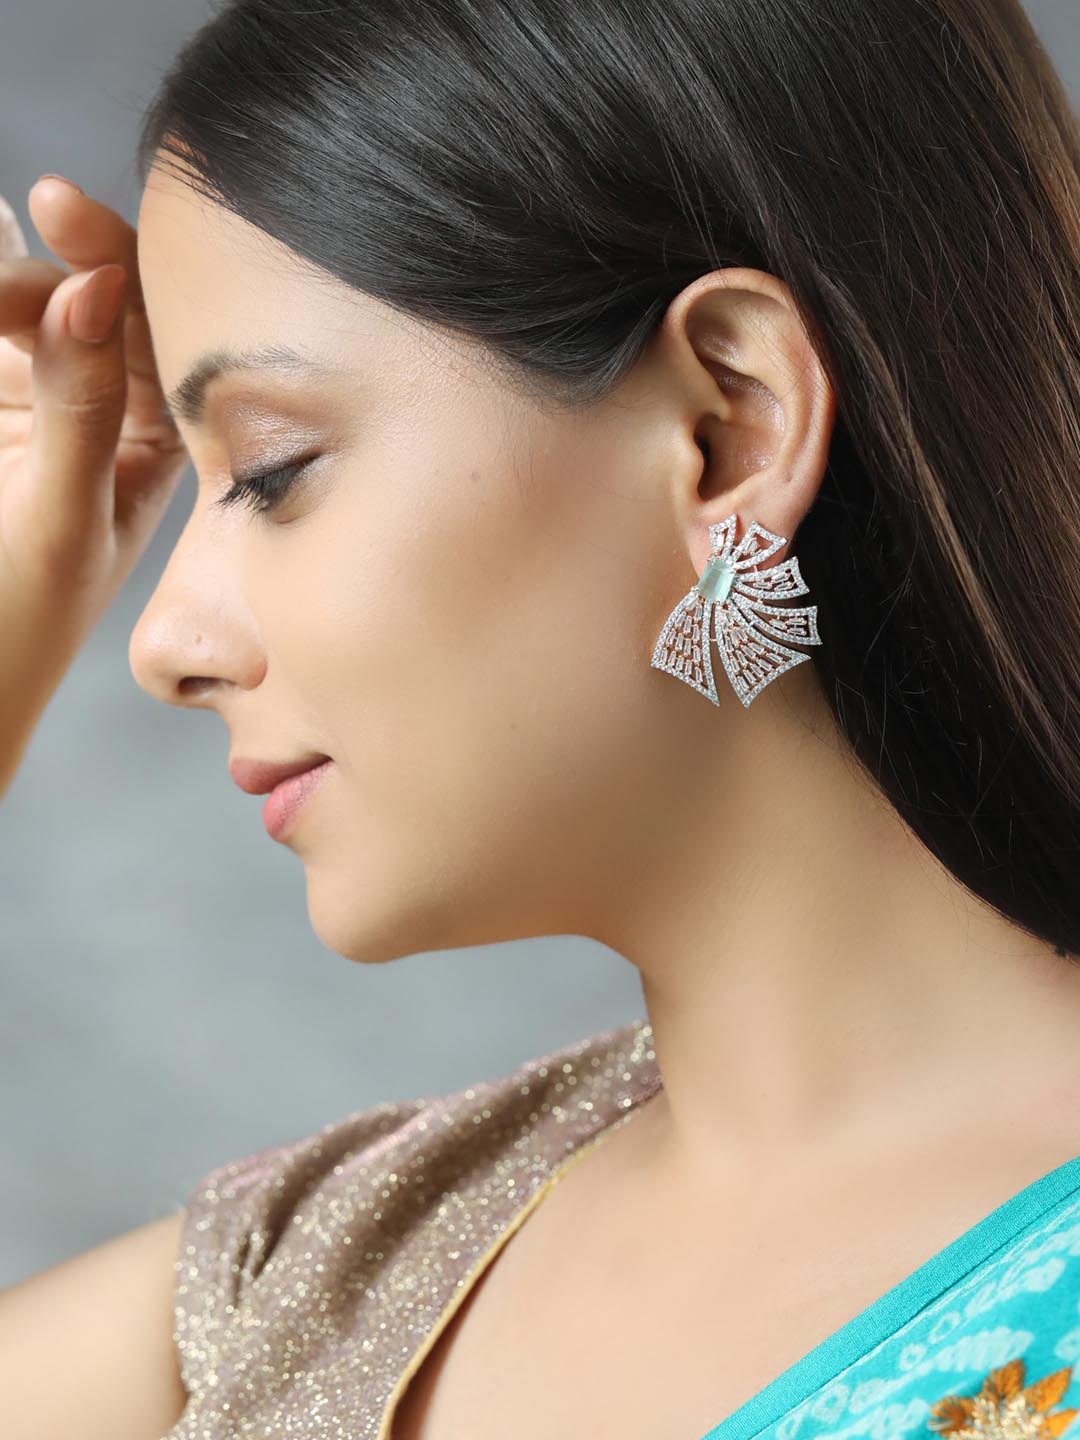 25+ Heavy Earrings For Brides Who Love All-Things-Extravagant! | Dazzling  earrings, Heavy earrings, Bridal earrings